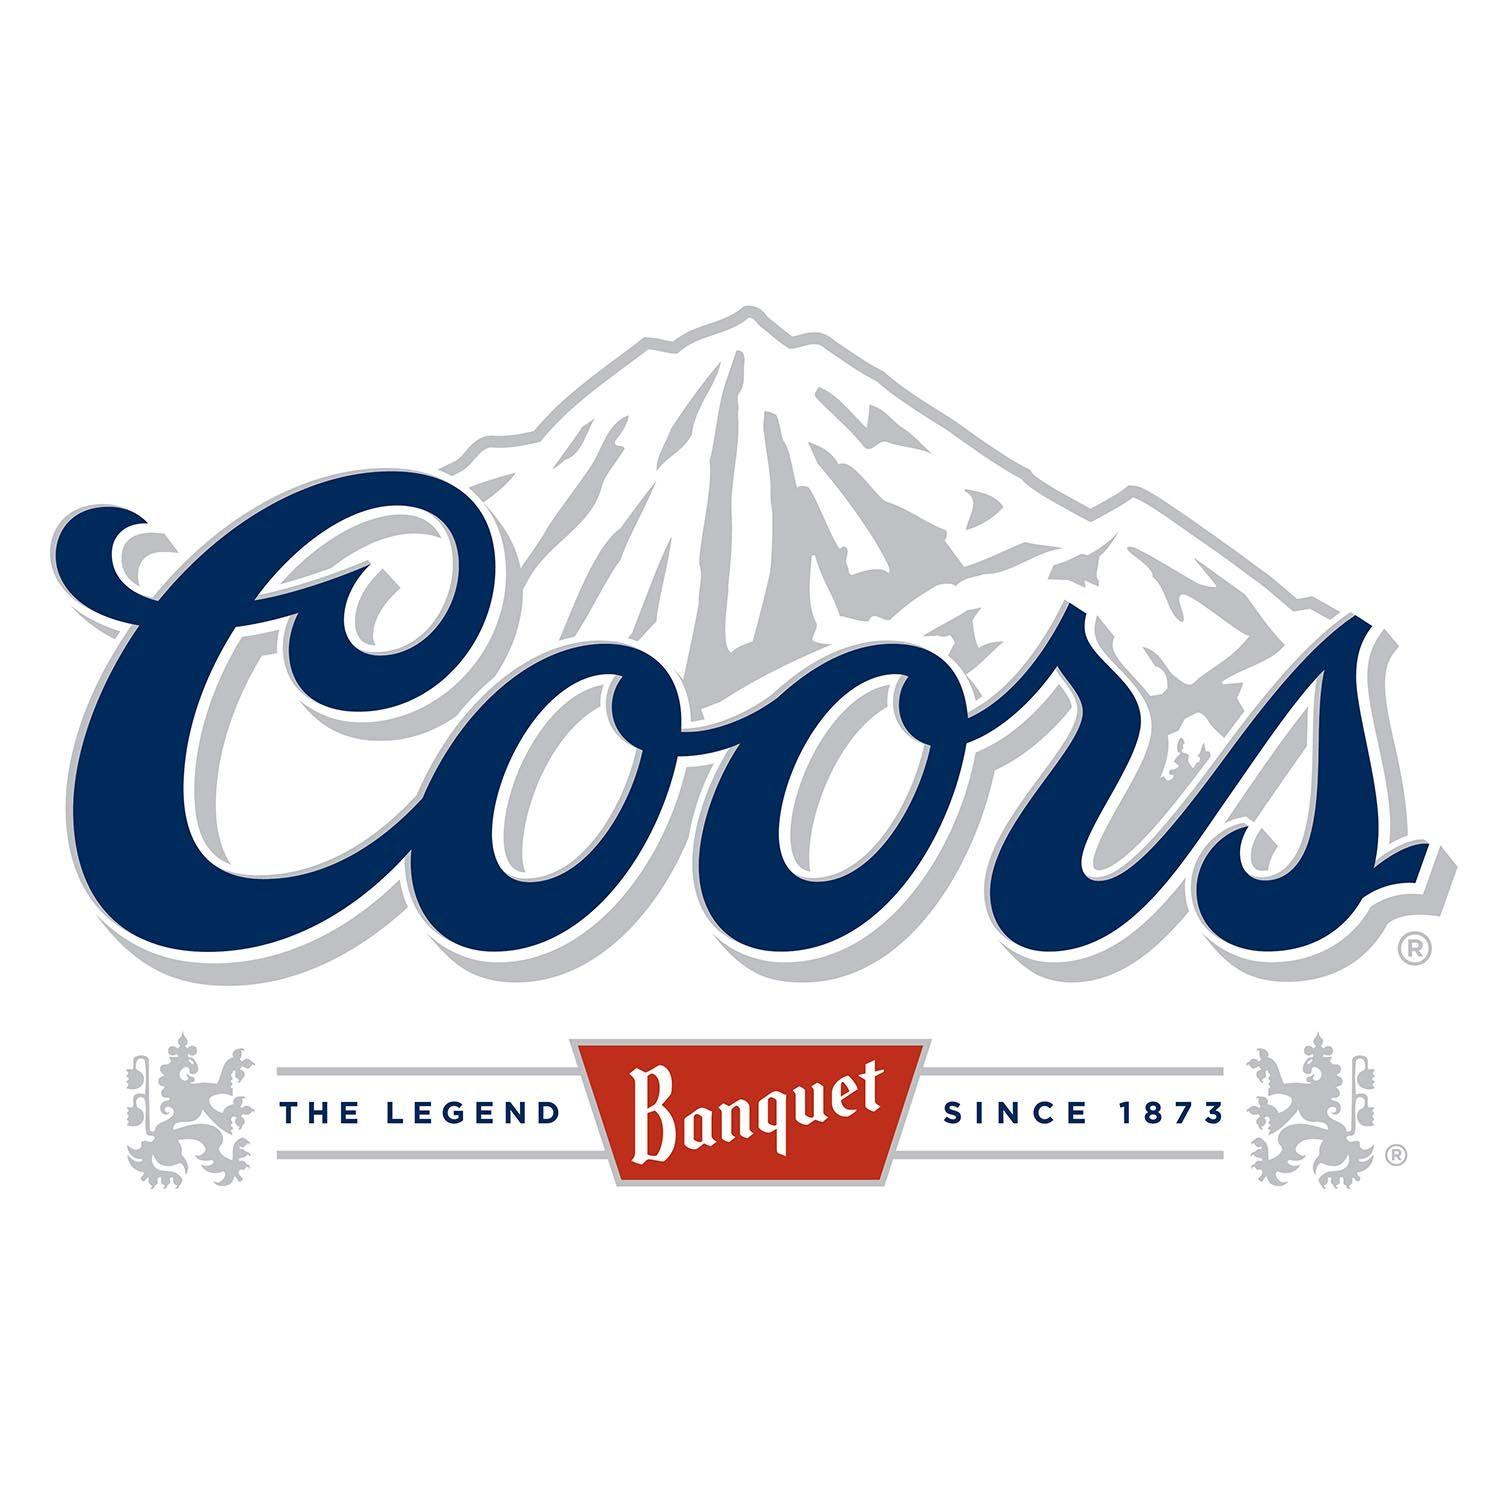 Coors Logo - Coors banquet Logos